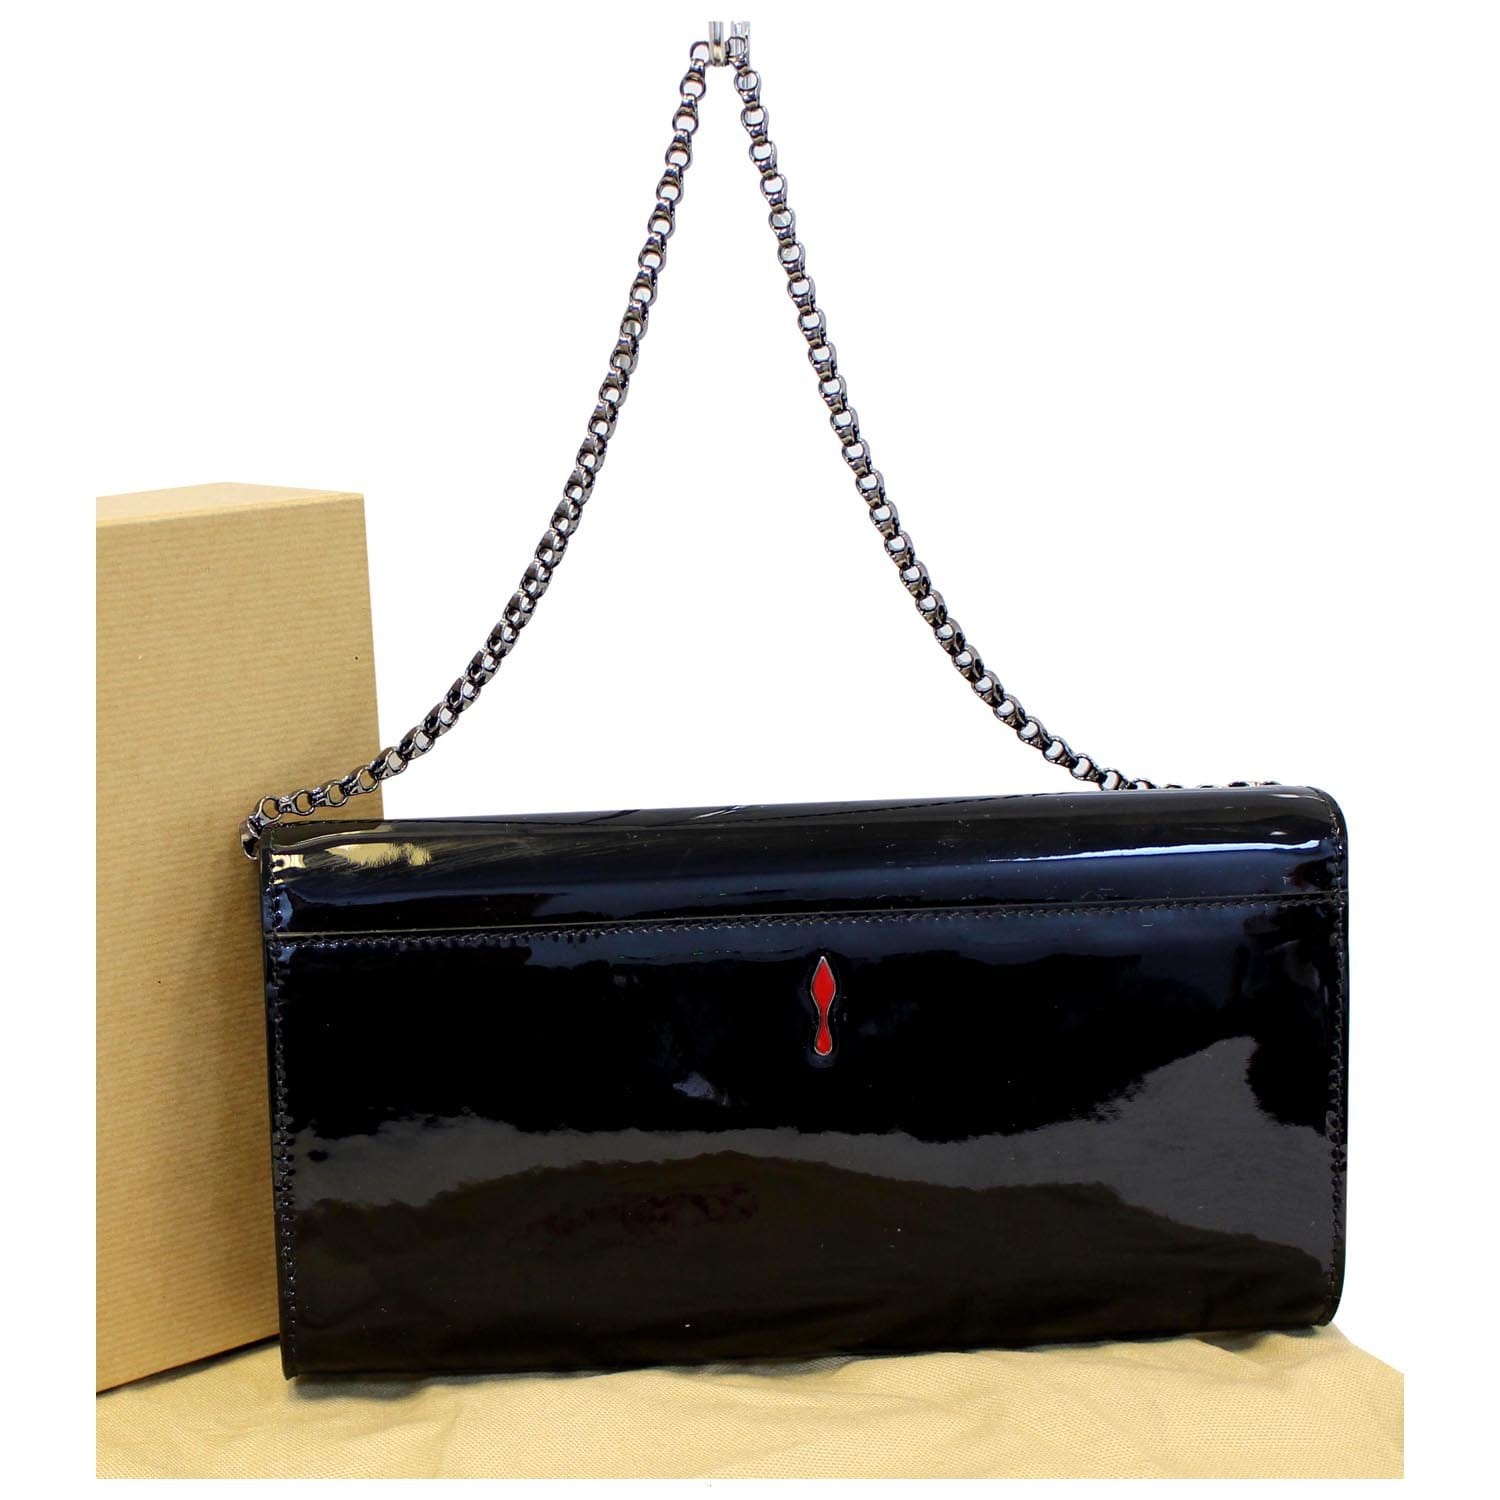 KD Black Patent Leather Embossed Genuine Leather Clutch Handbag